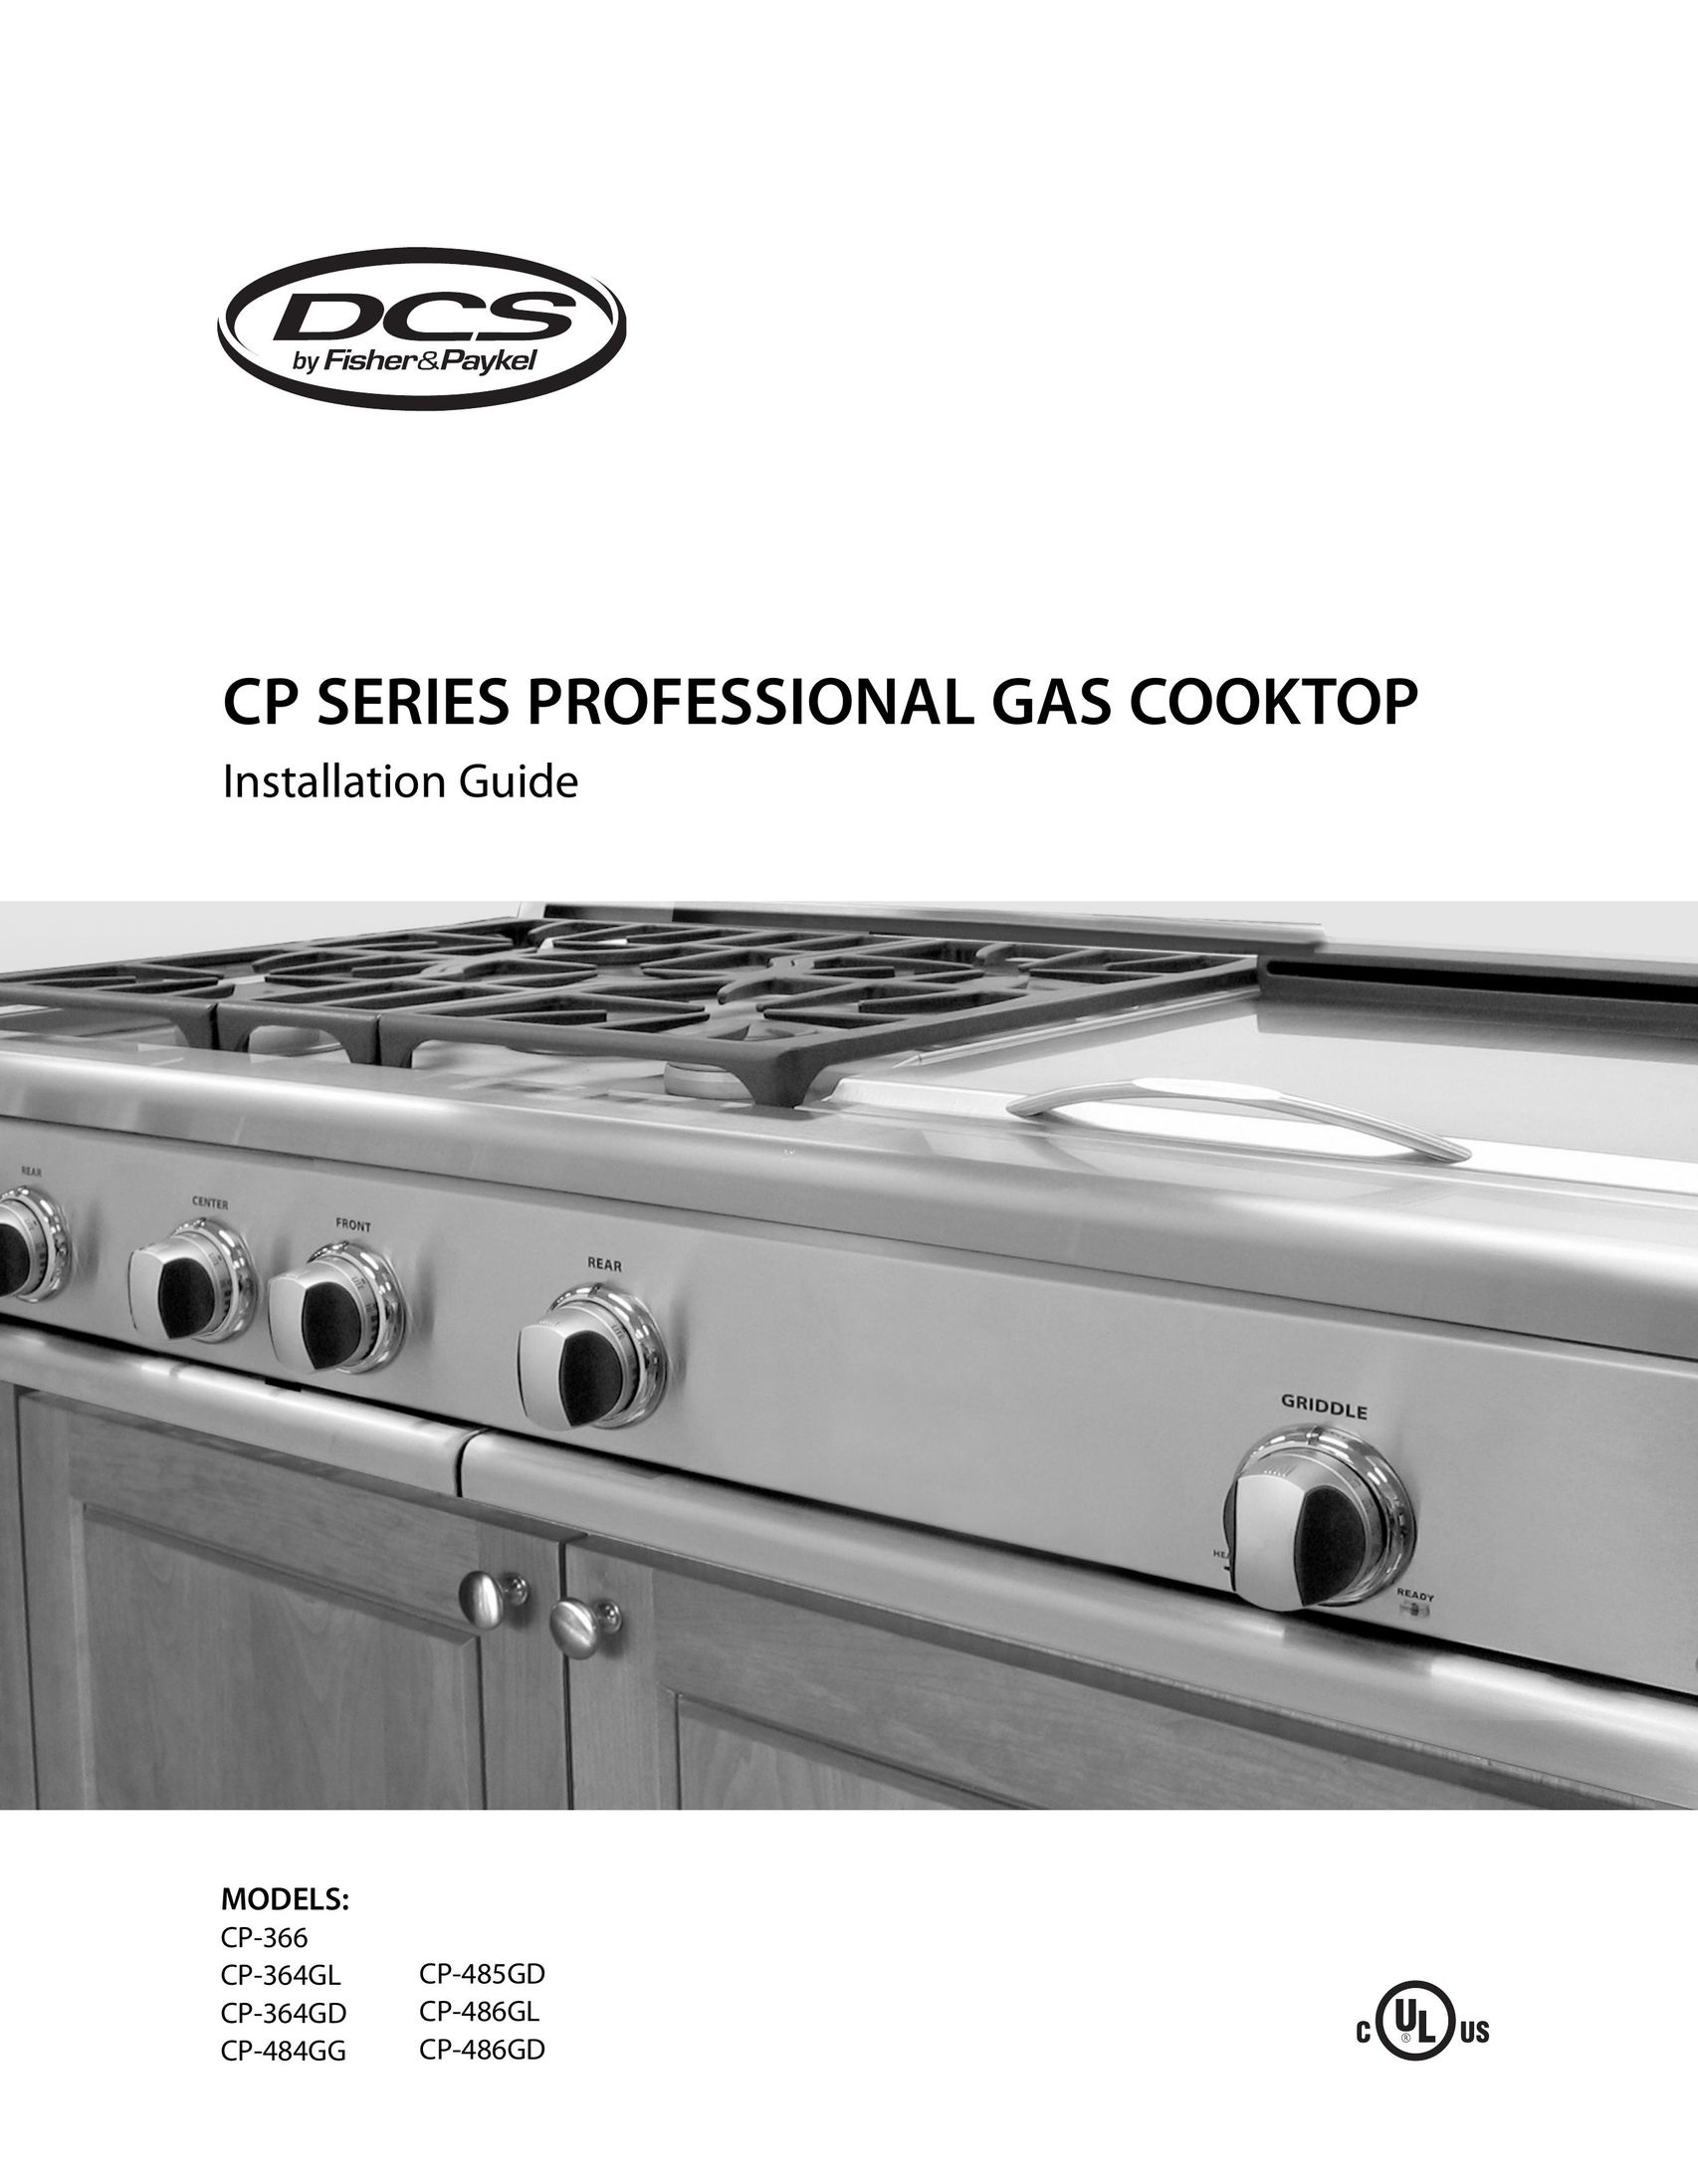 DCS CP-486GL Cooktop User Manual